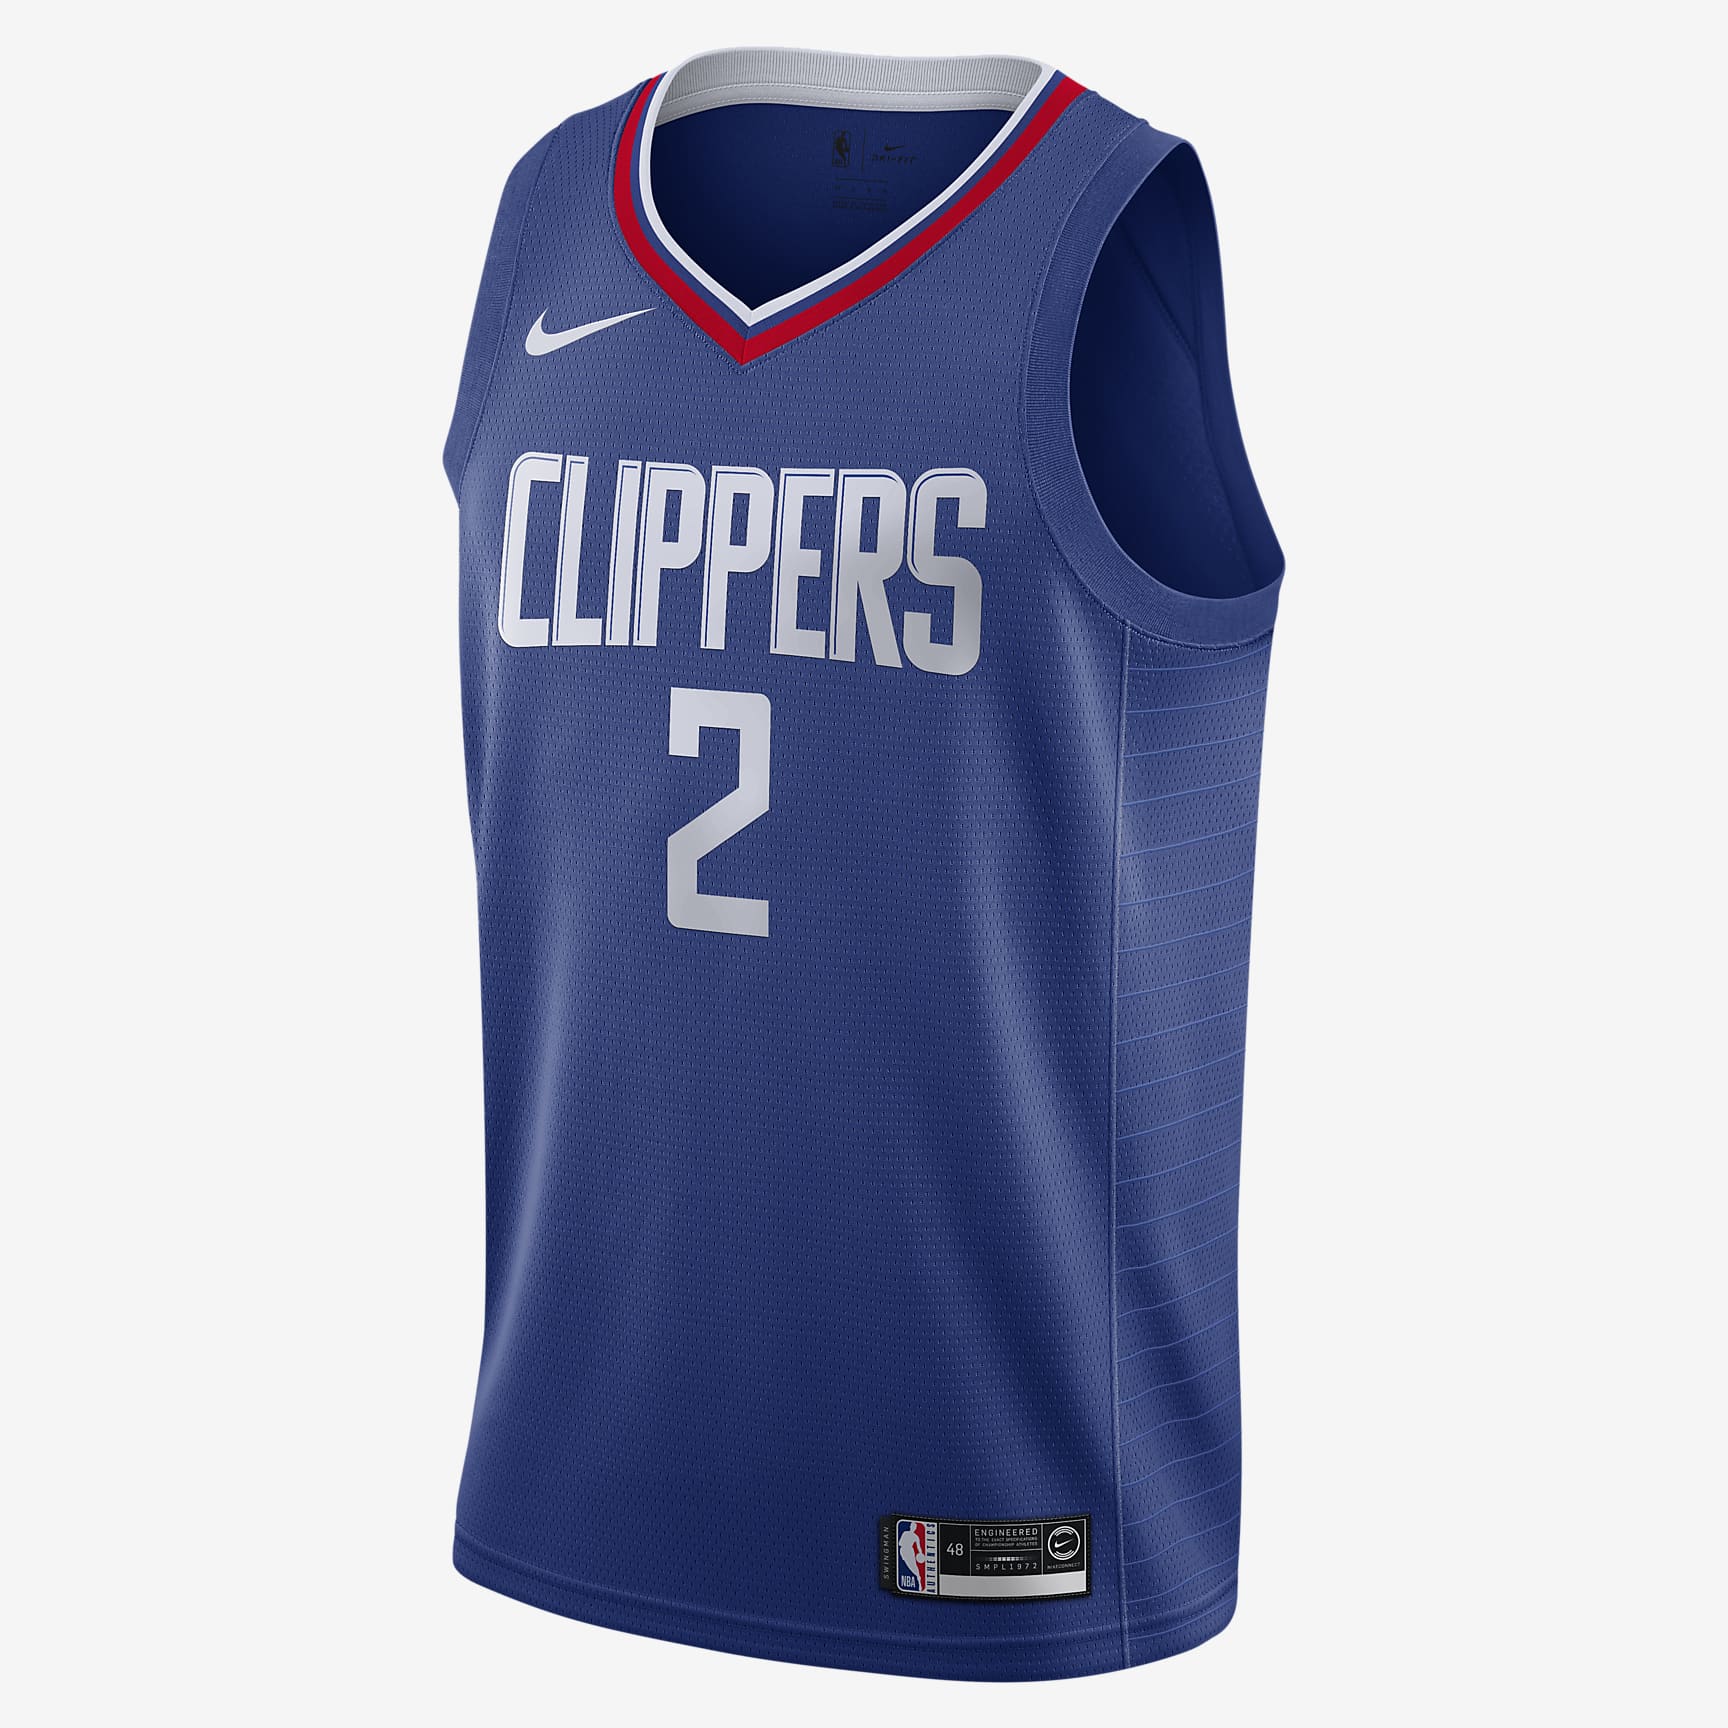 Kawhi Leonard Clippers Icon Edition Nike NBA Swingman Jersey. Nike.com